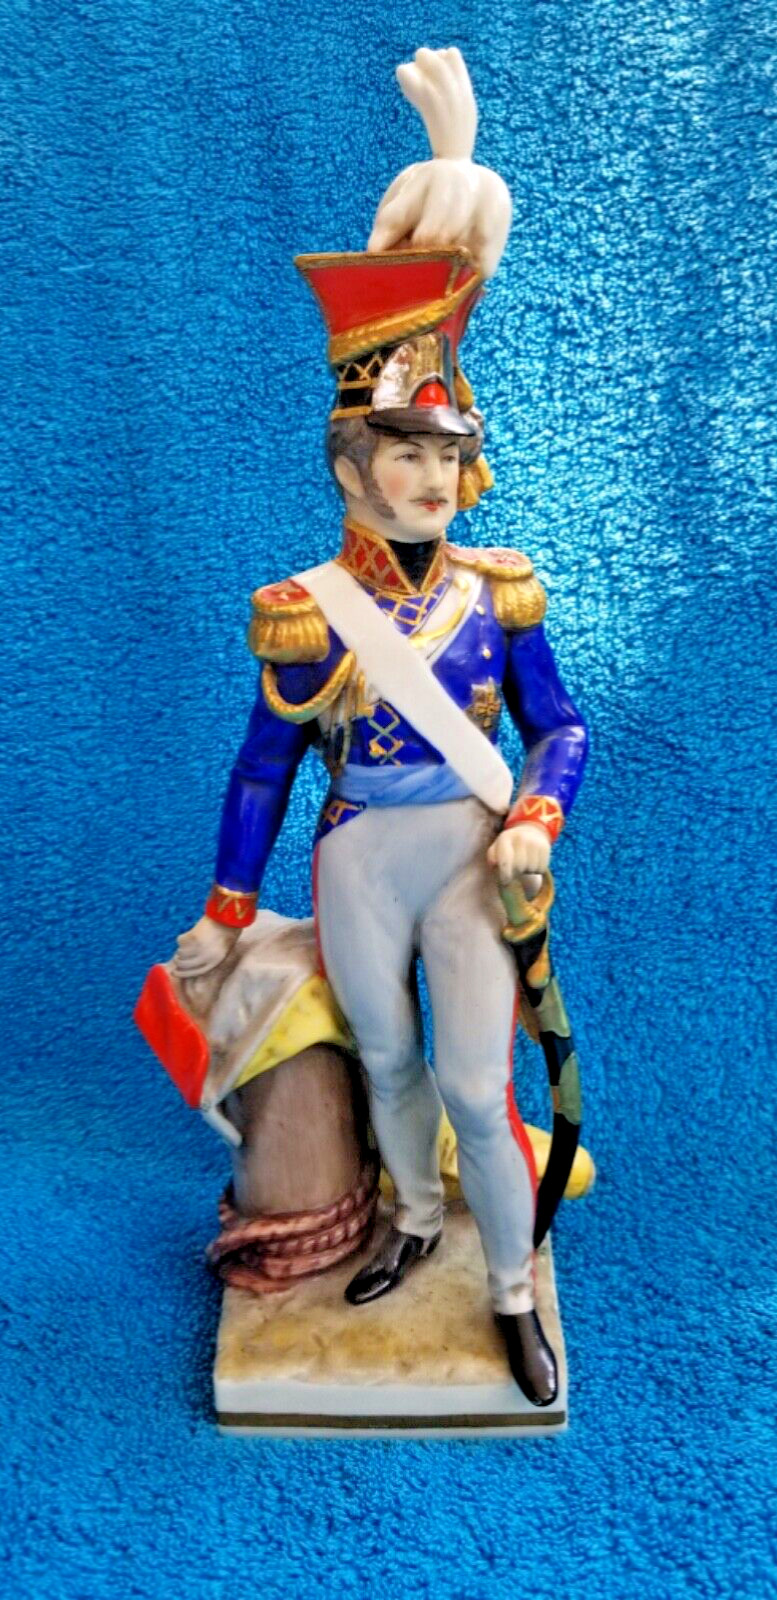 Collectors Item-Russ Ulan-Offz 1815 Napoleonic Military Figurine